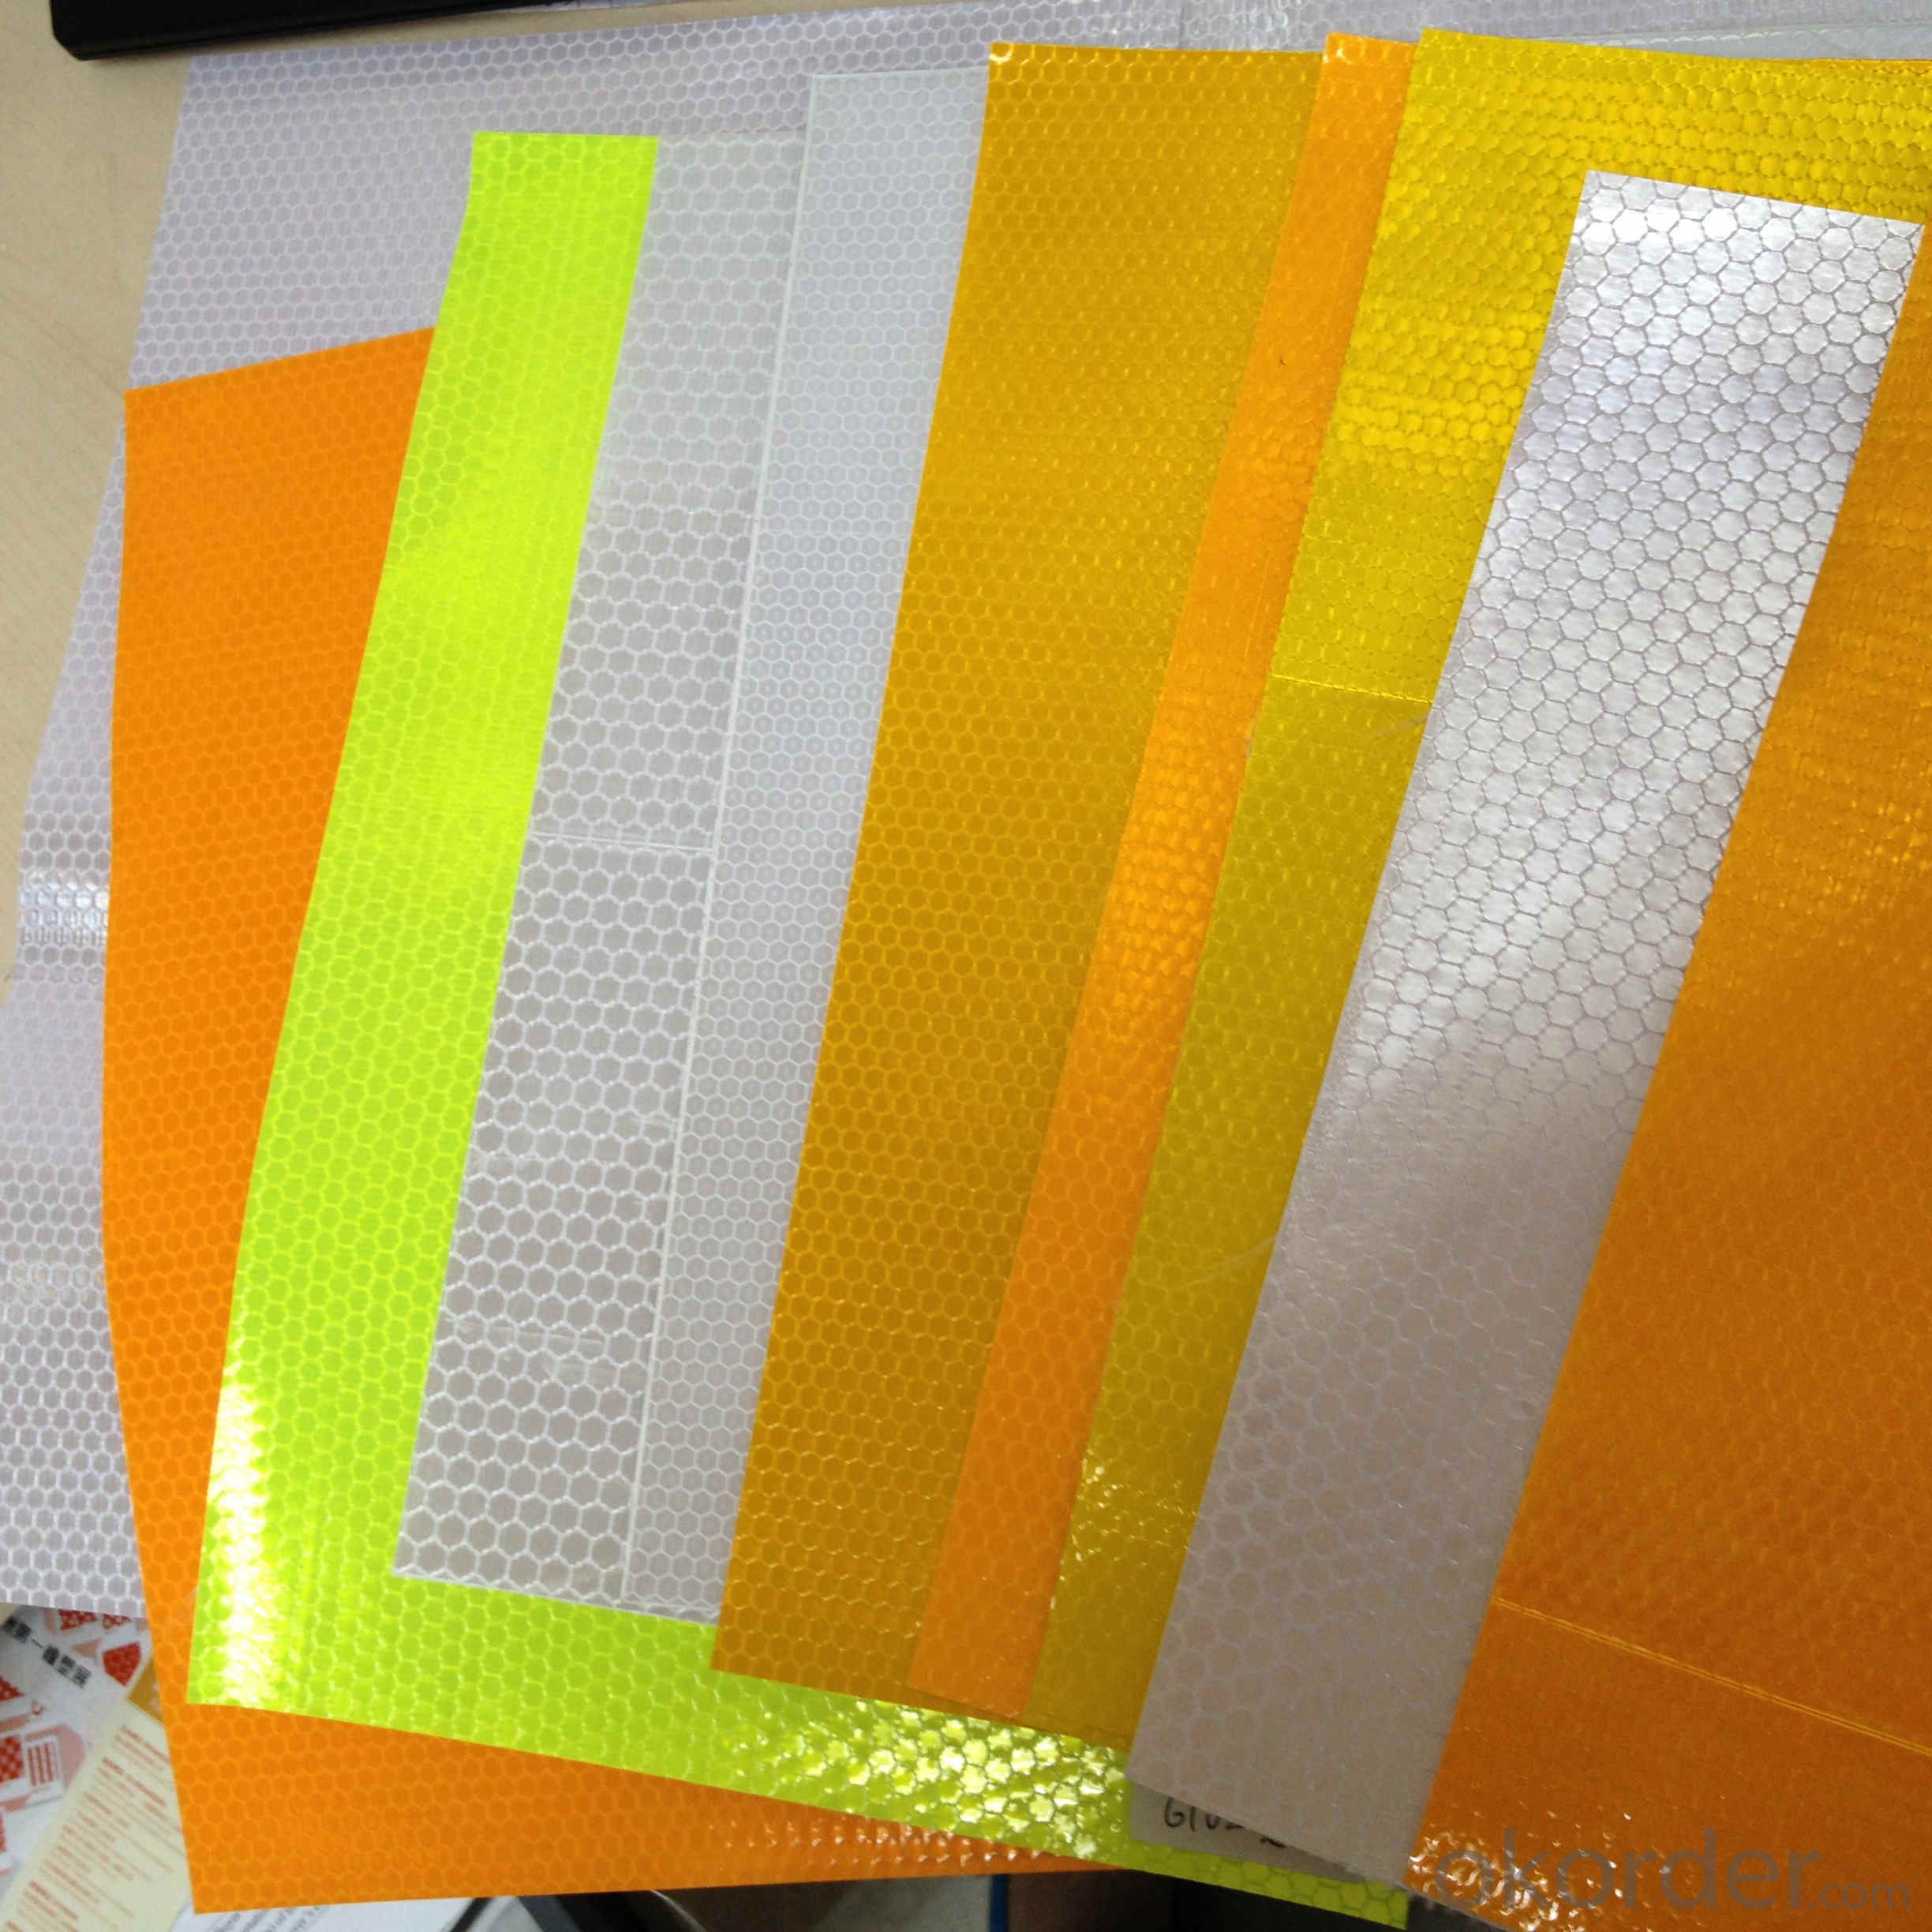 .5 x 30ft, Silver VViViD High Intensity Industrial Grade Honeycomb Pattern Reflective Vinyl Tape 